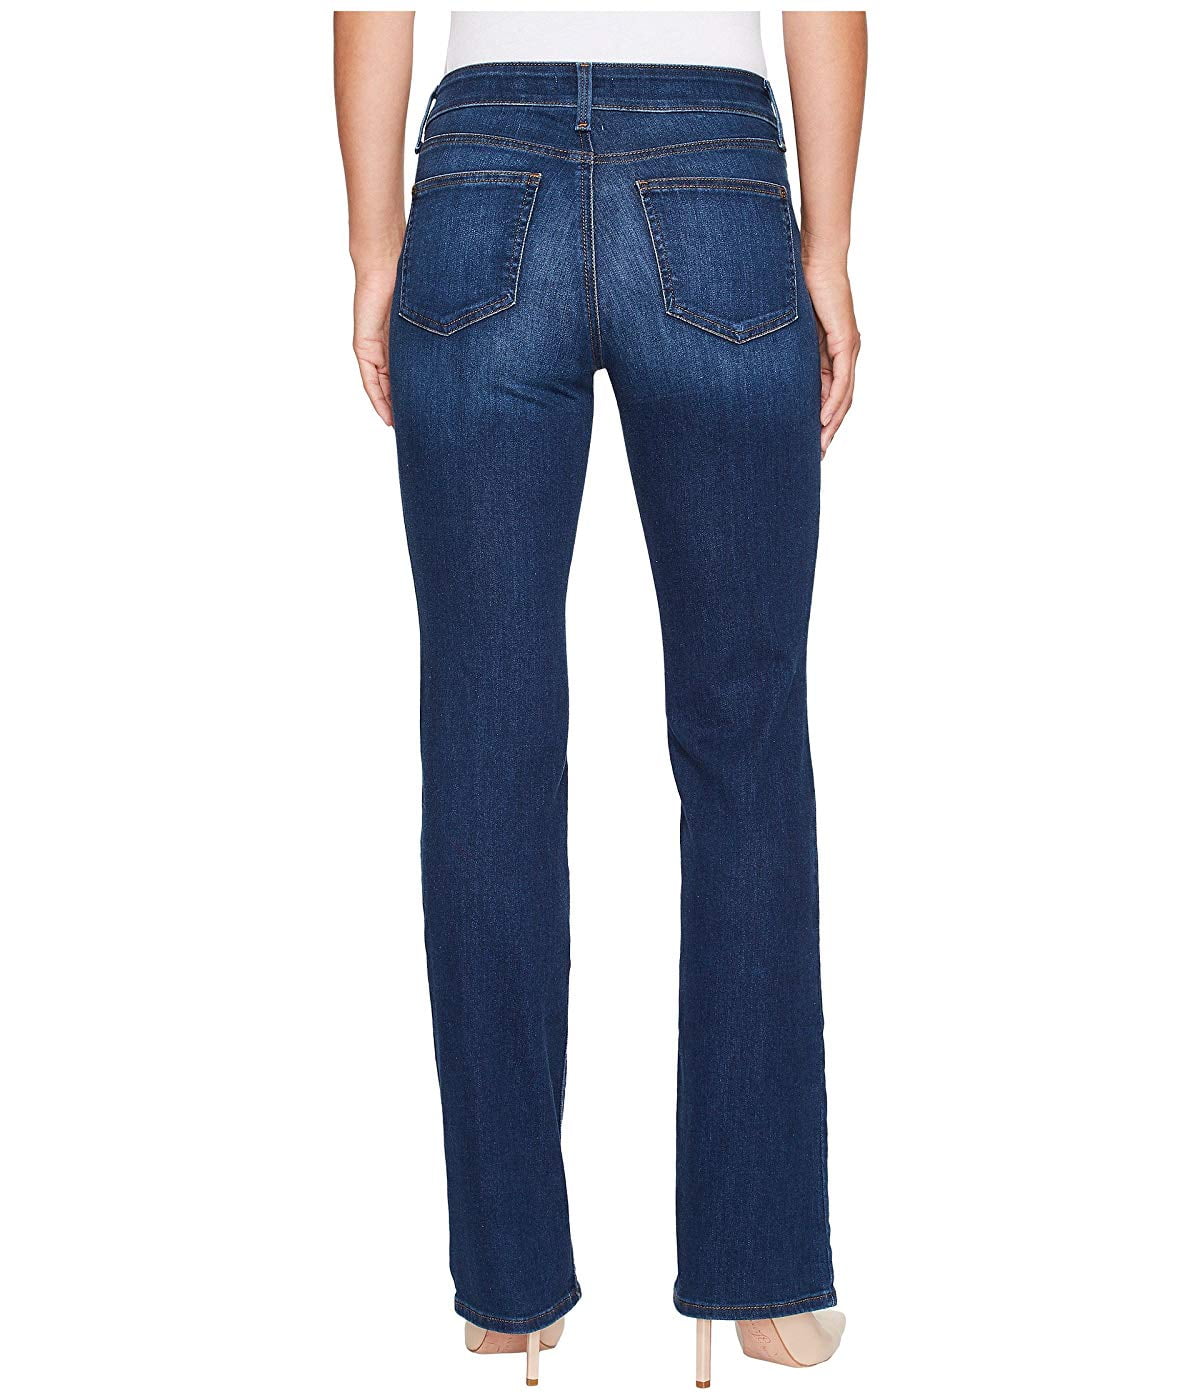 NYDJ Barbara Bootcut Jeans in Cooper Cooper - Walmart.com - Walmart.com